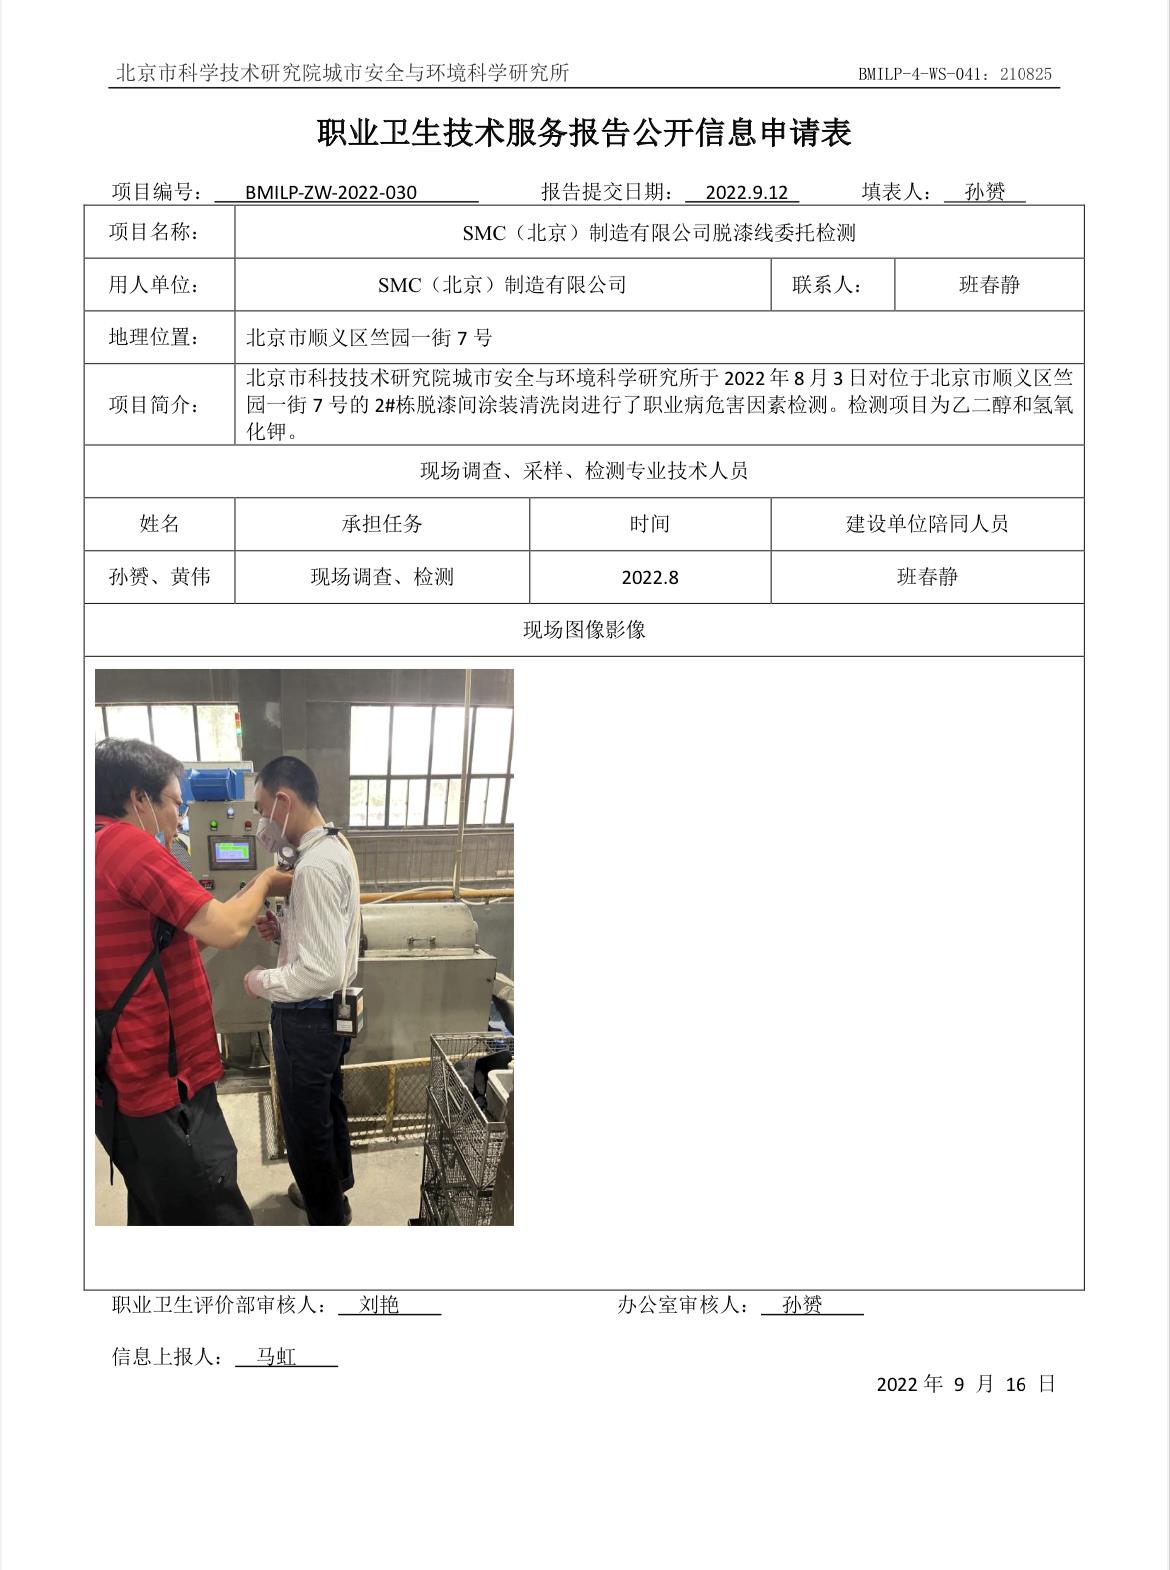 SMC(北京）制造有限公司脱漆线委托检测